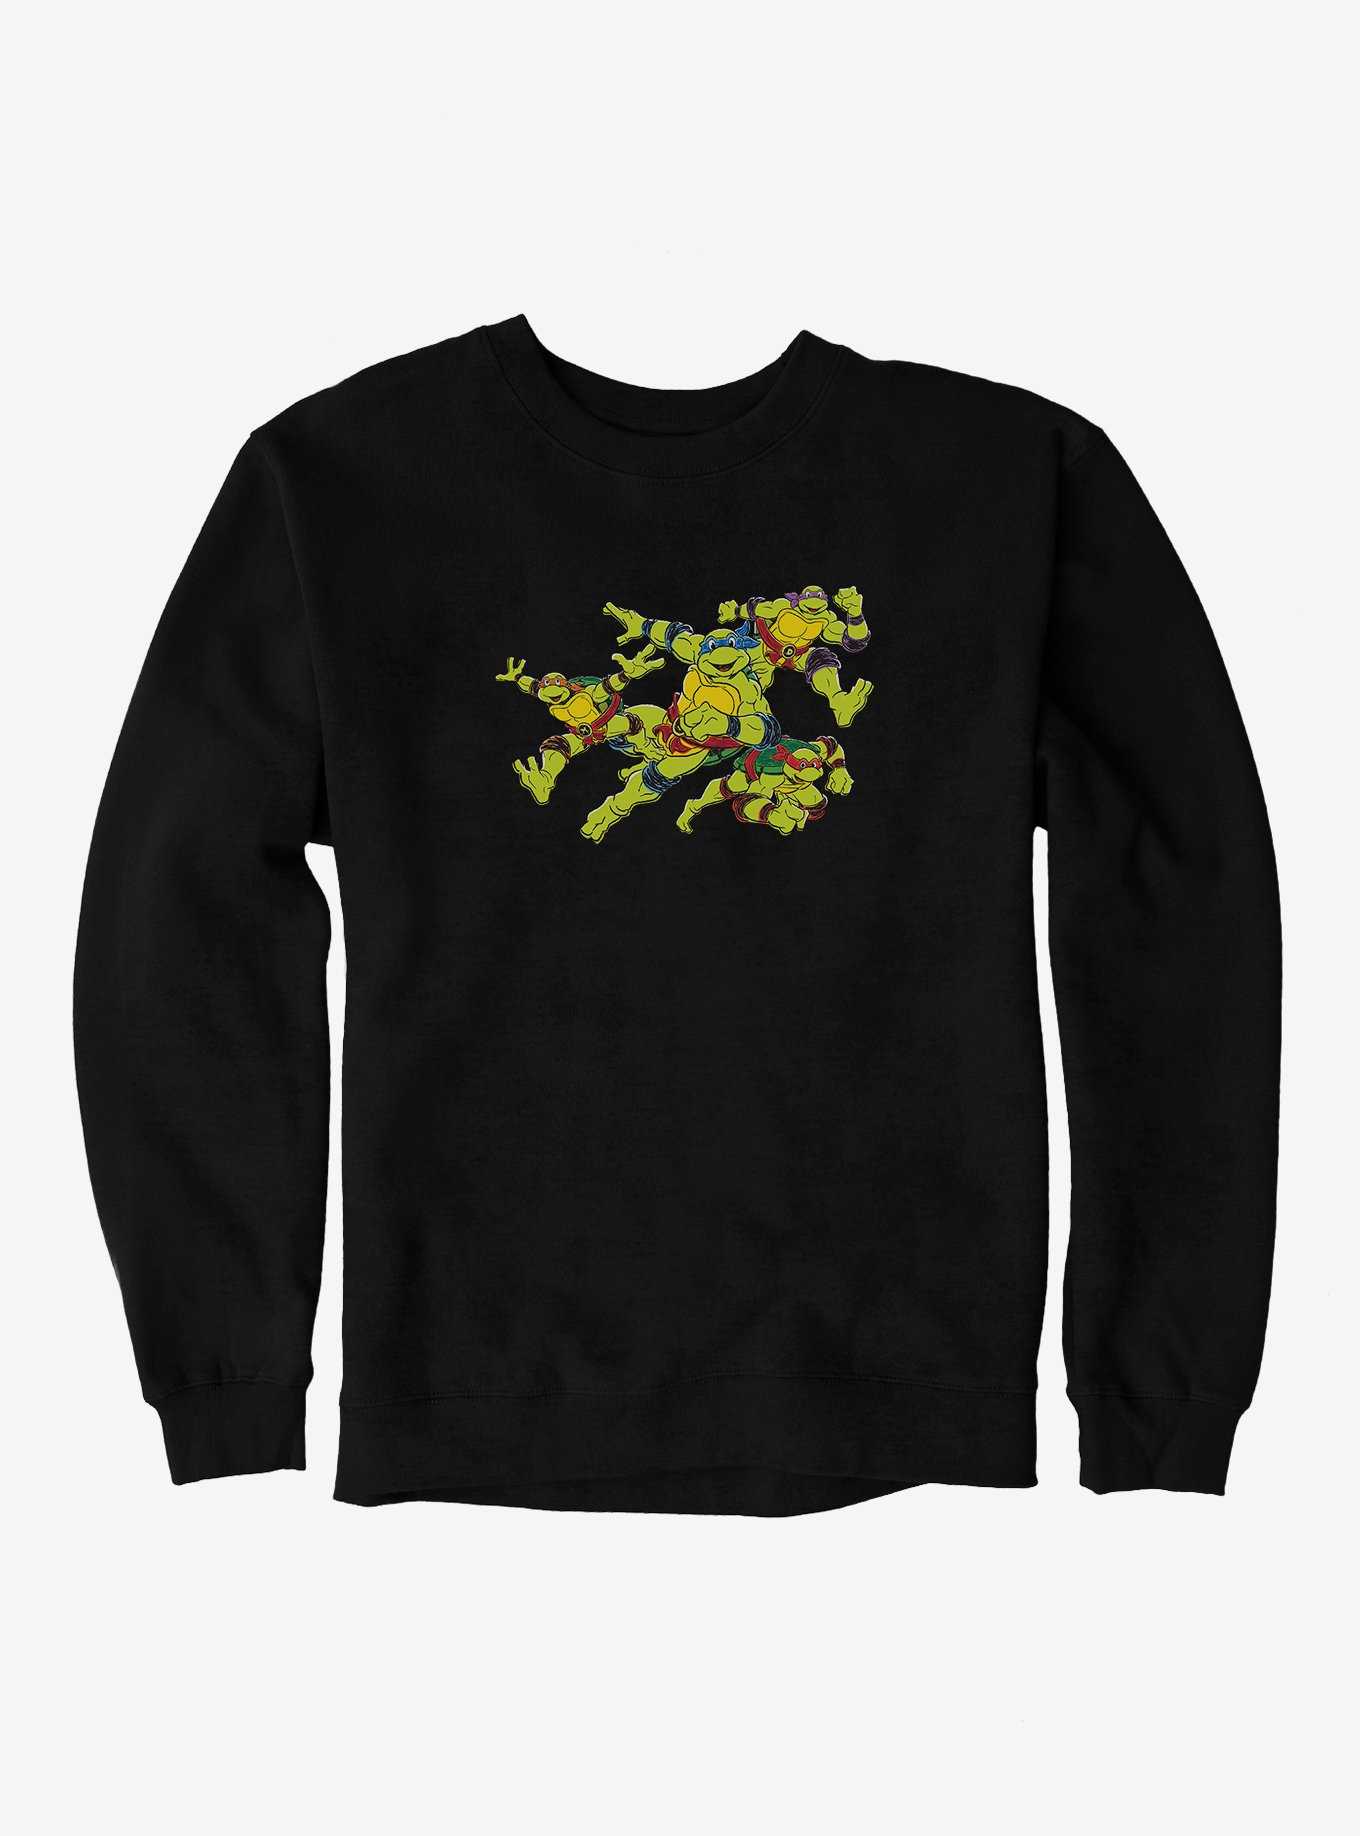 Teenage Mutant Ninja Turtles Group Action Poses Sweatshirt, , hi-res